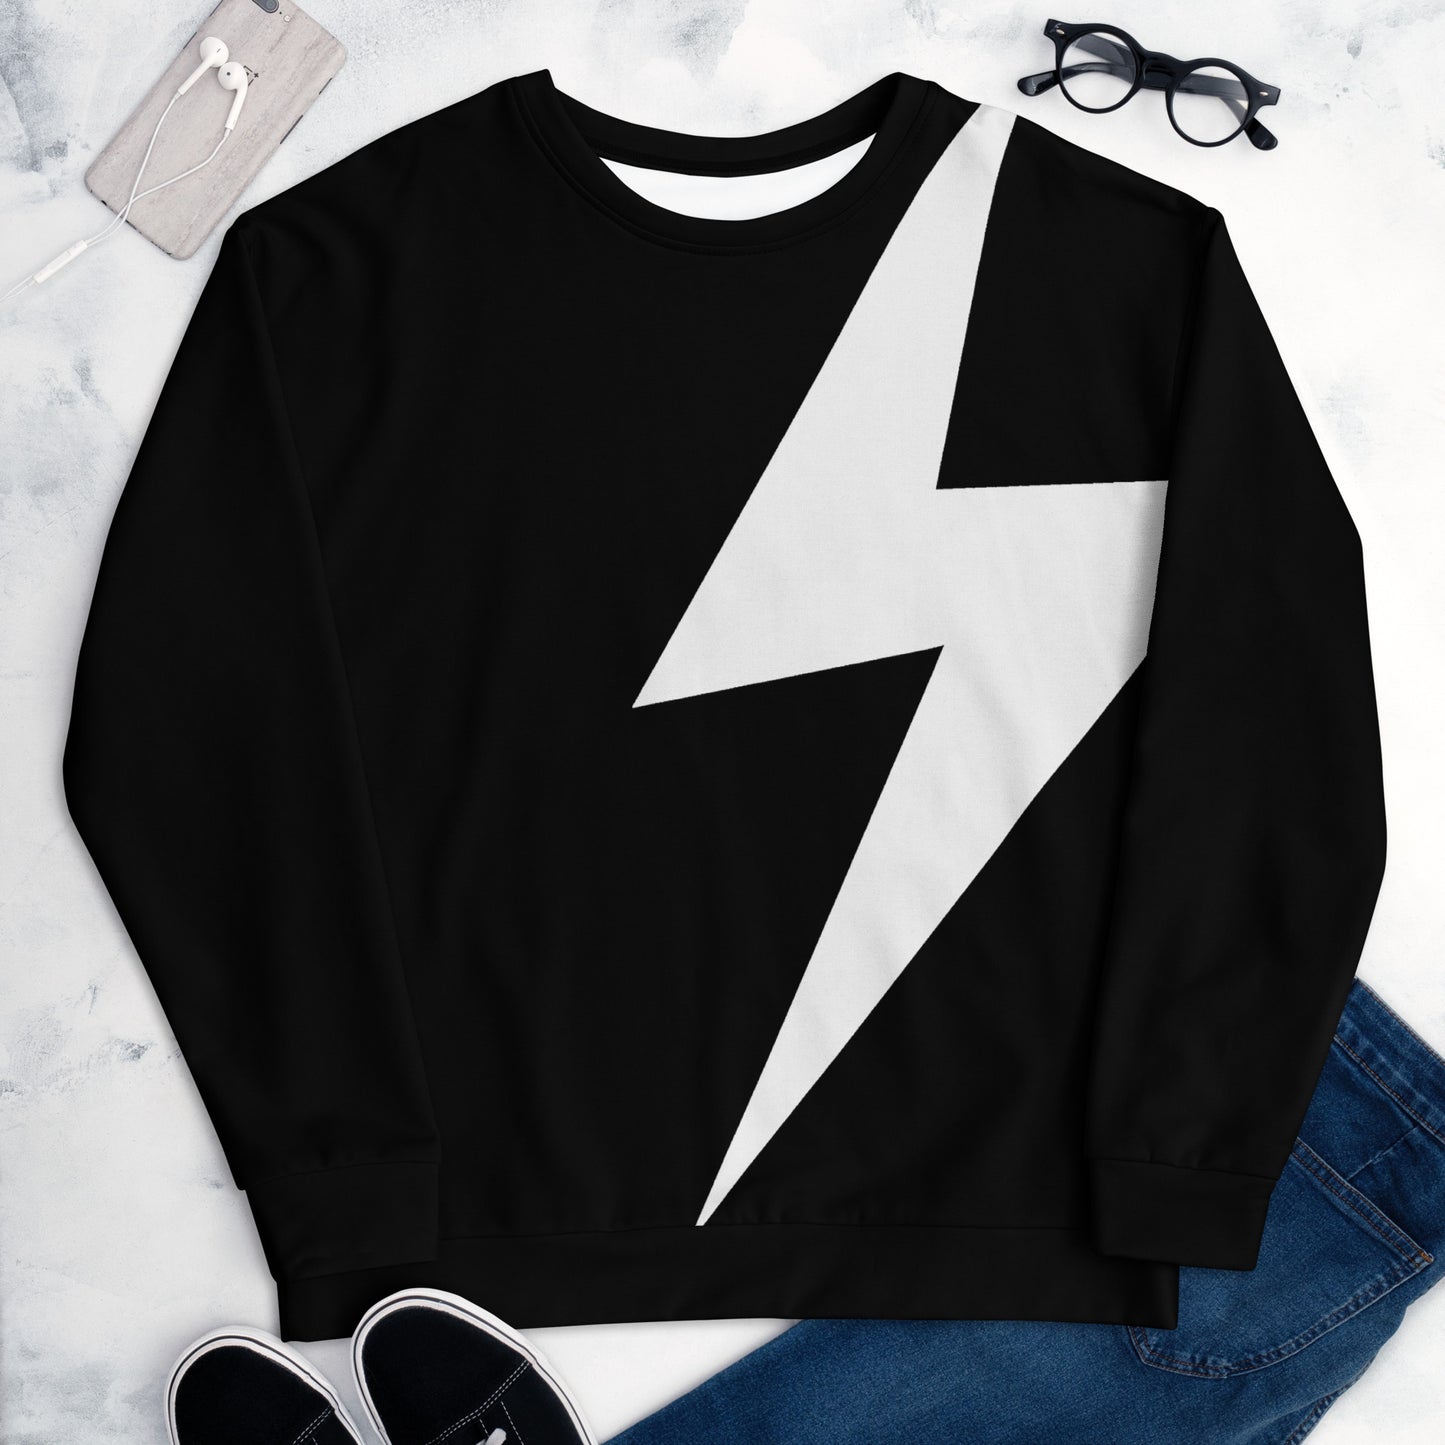 Lightning Bolt KiSS Unisex Sweatshirt - David Rose Schitt's Creek Inspired - Black and White - TV Show